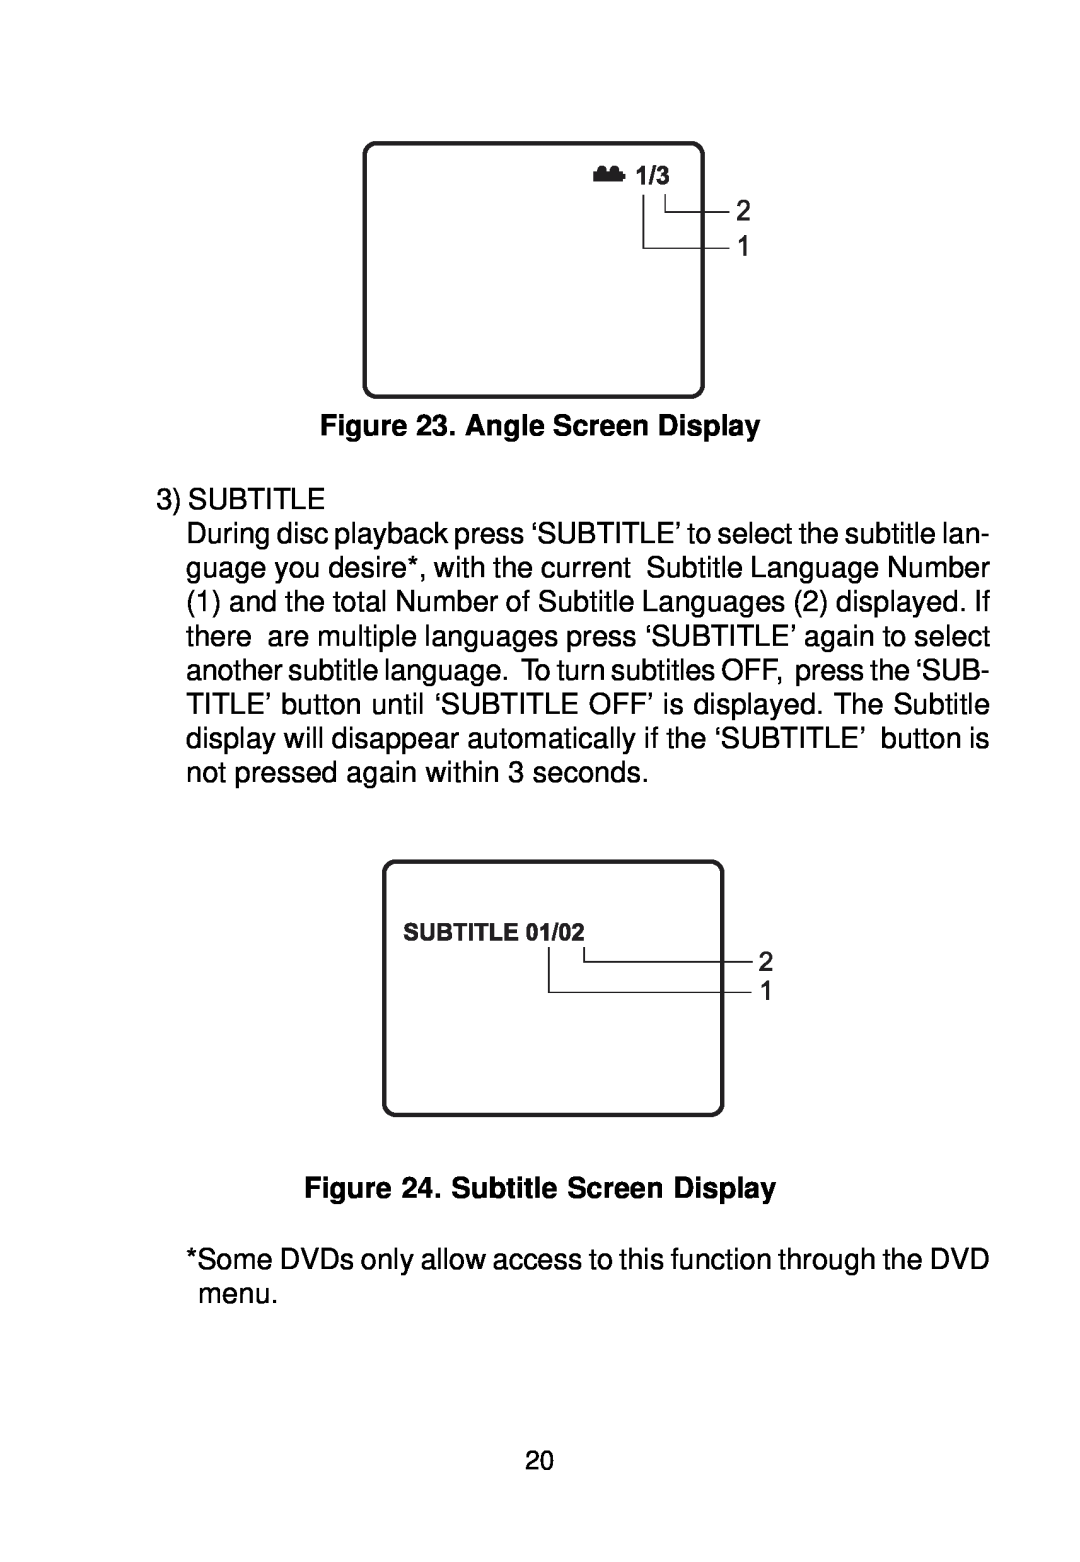 Audiovox VBP58 manual Angle Screen Display, Subtitle Screen Display 